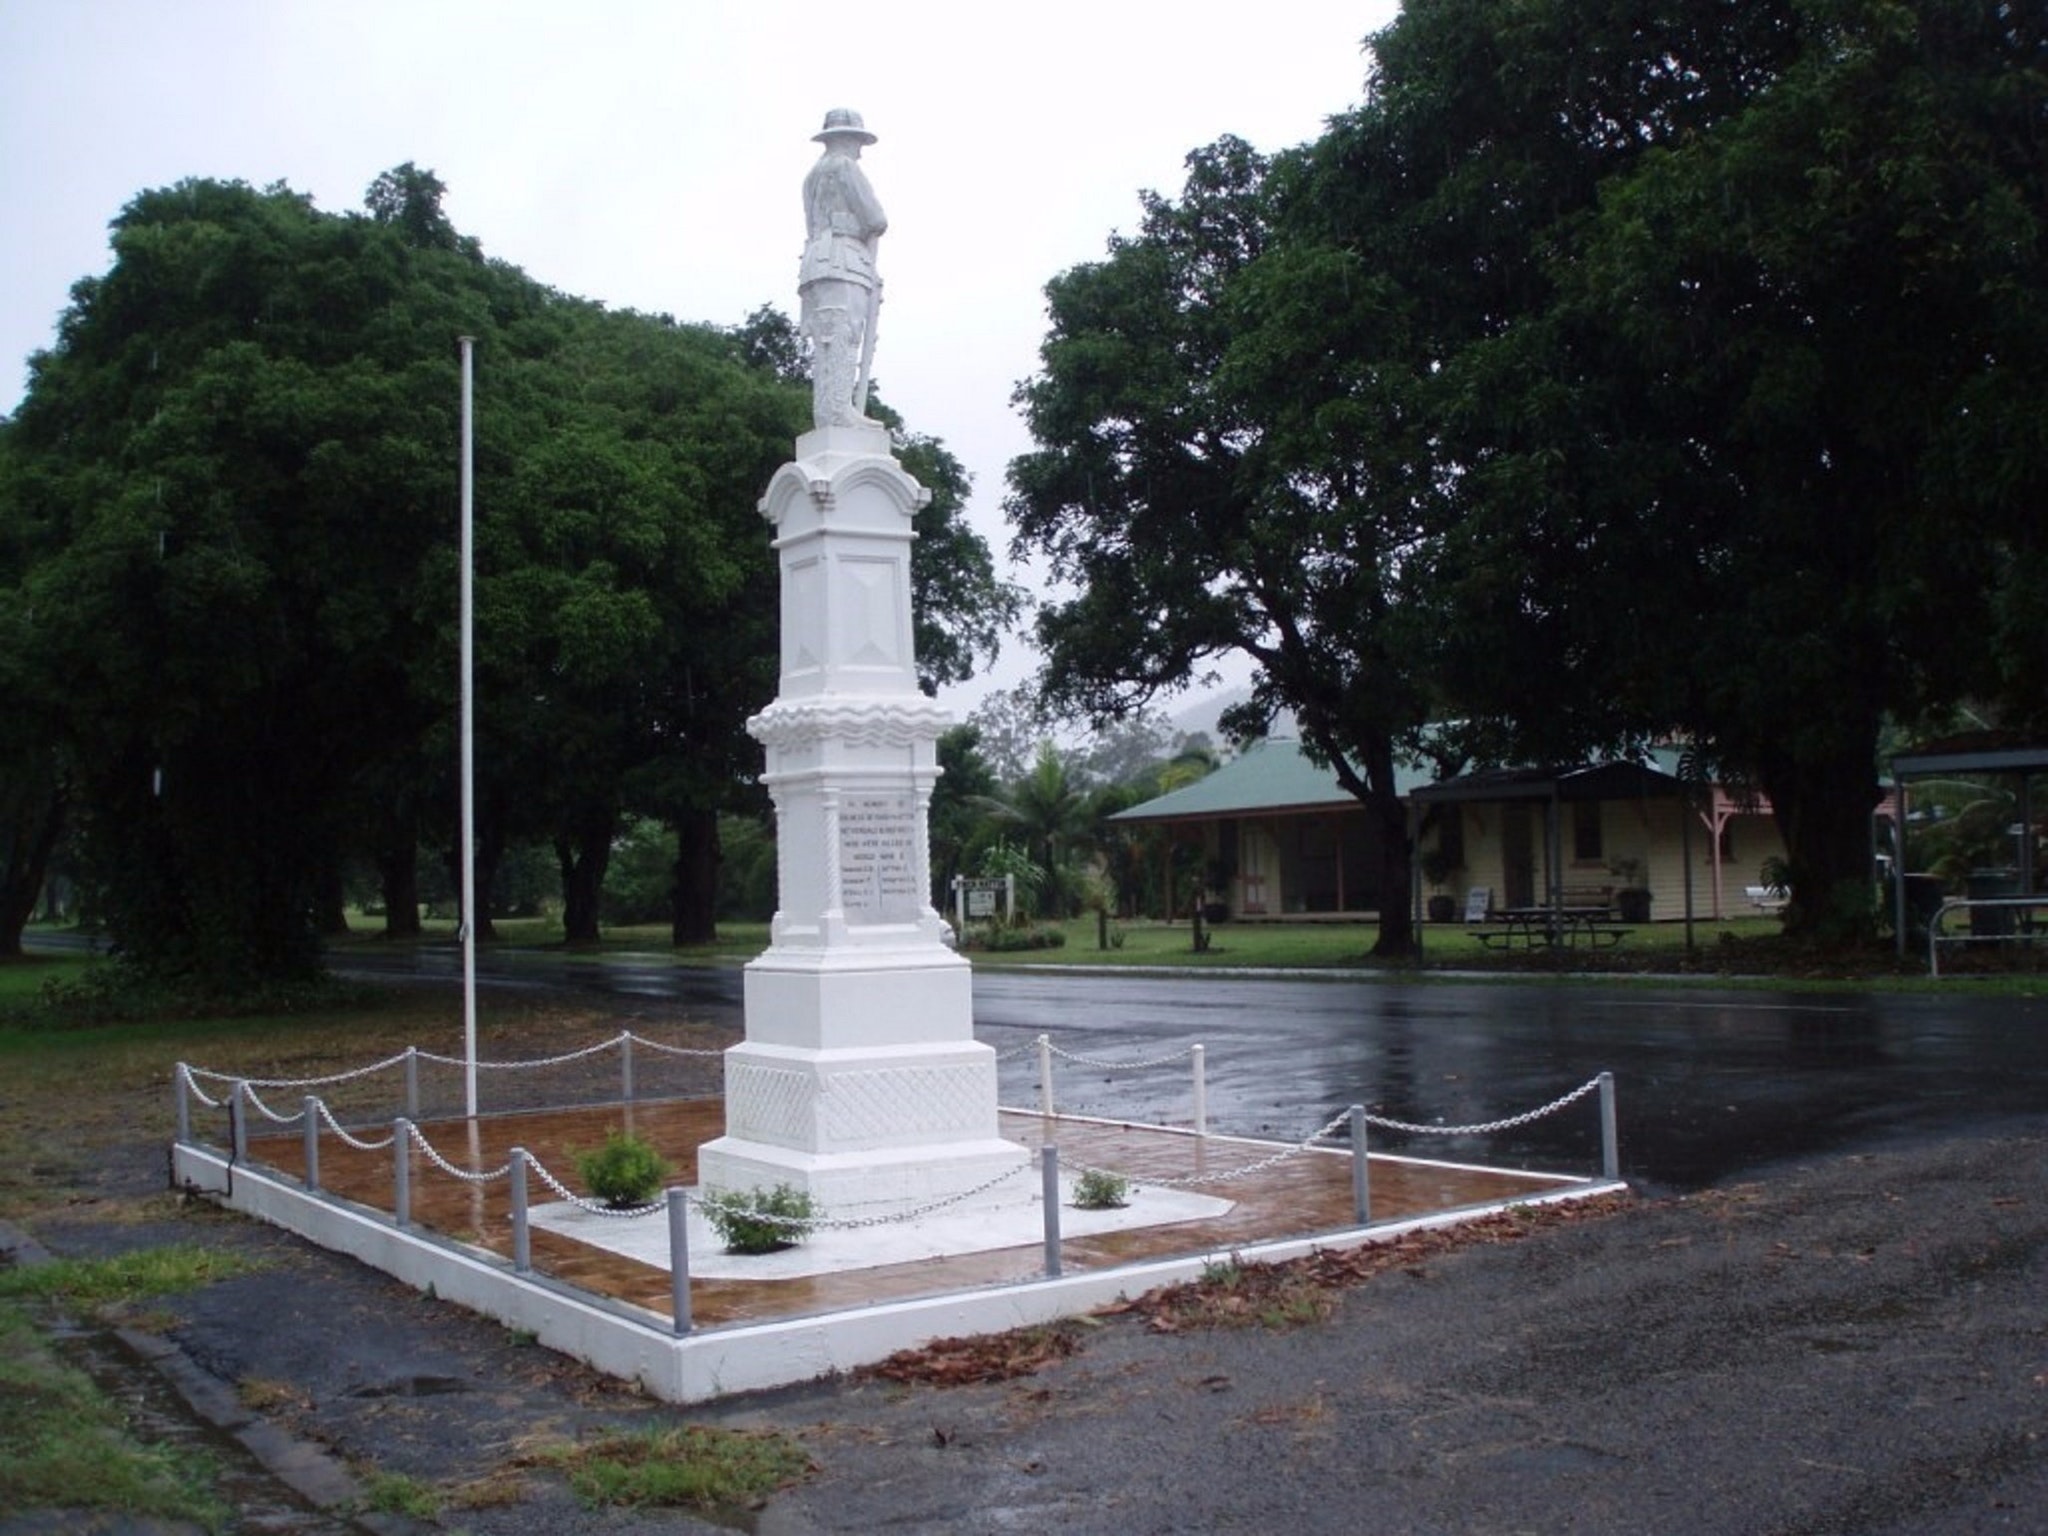 Finch Hatton War Memorial